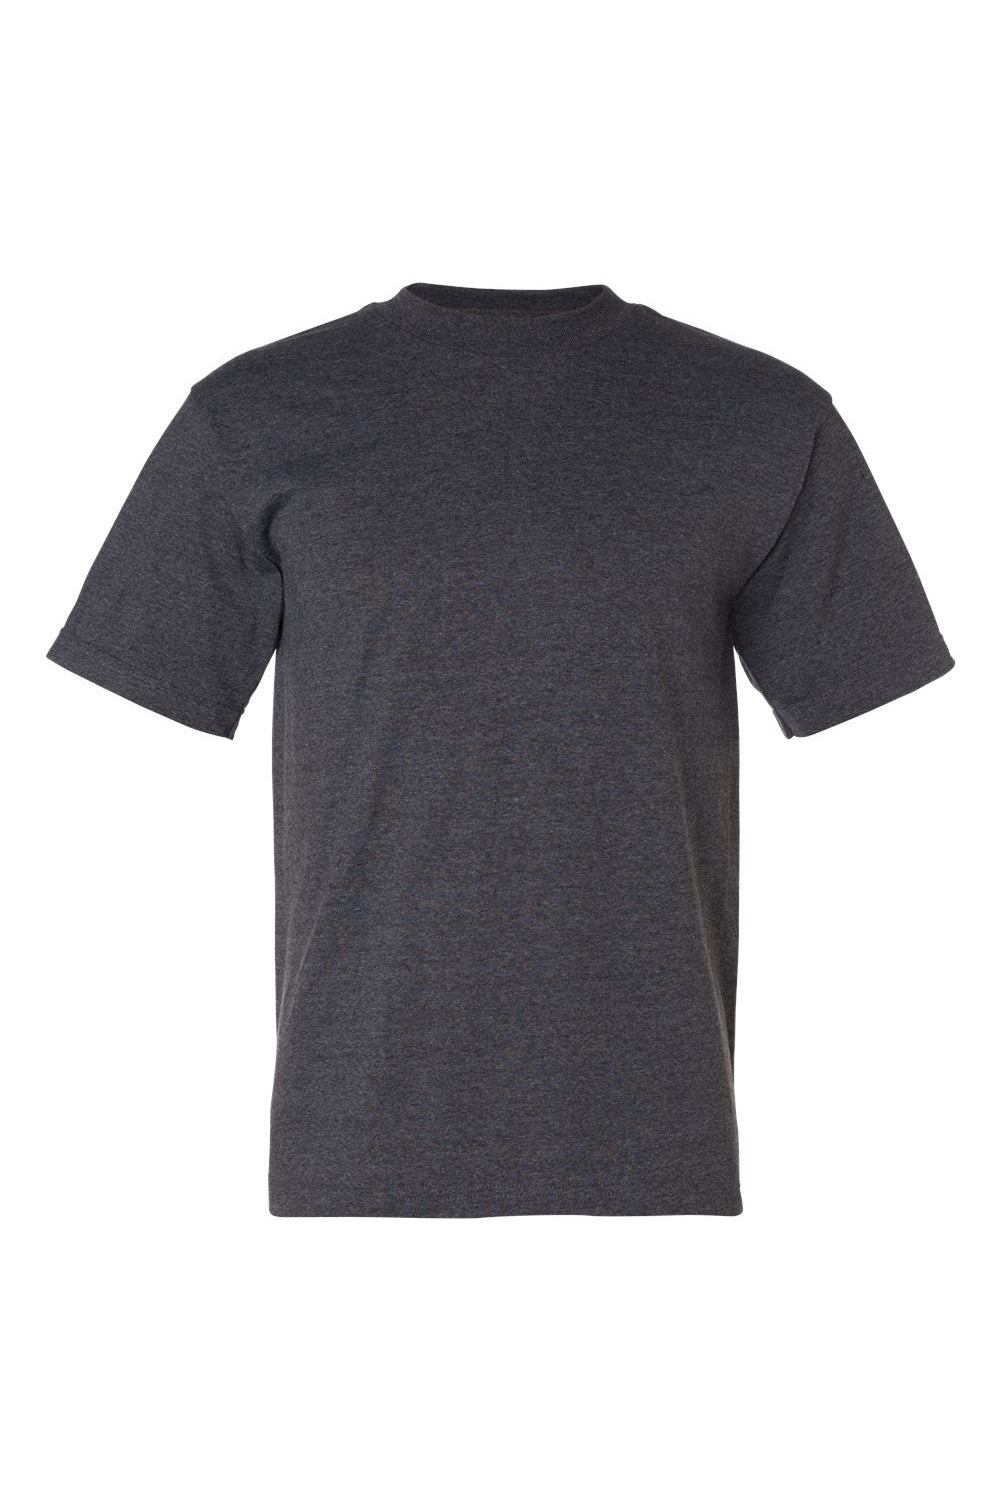 Bayside 1701 Mens USA Made Short Sleeve Crewneck T-Shirt Heather Charcoal Grey Flat Front